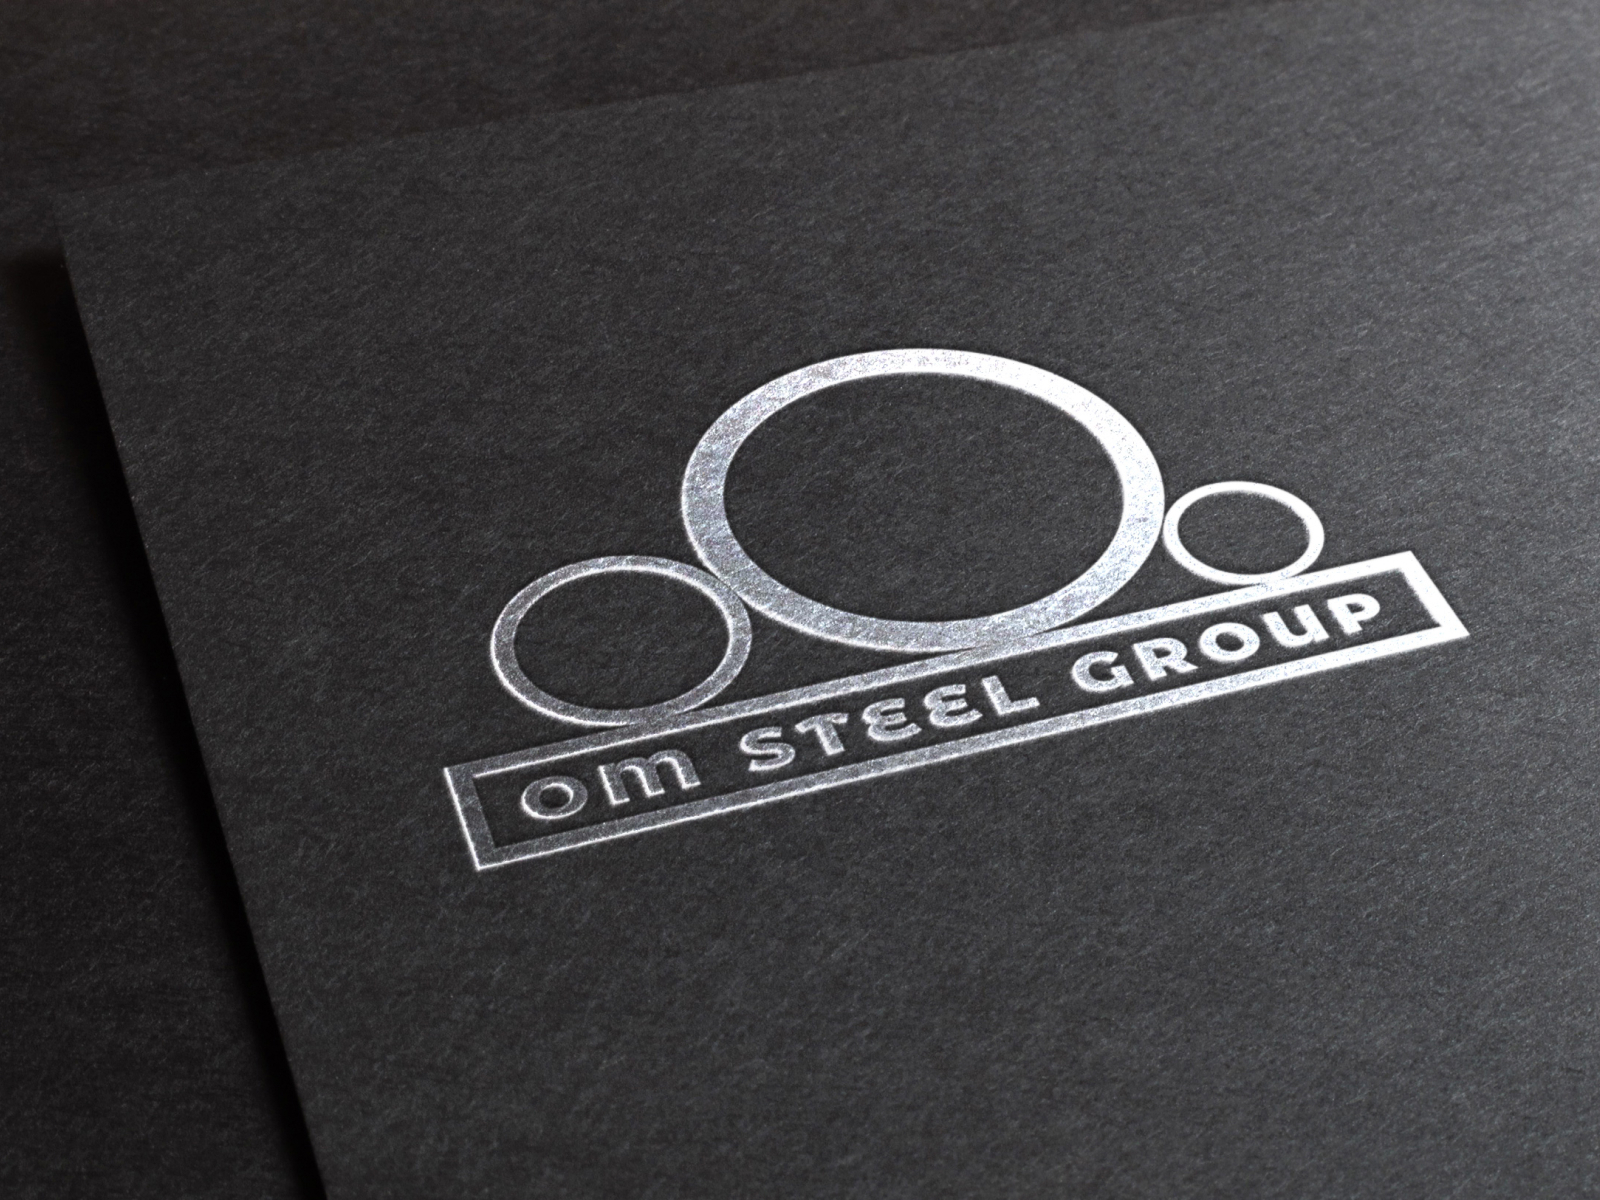 Om Steel Group Logo by Inderjit Kaur on Dribbble